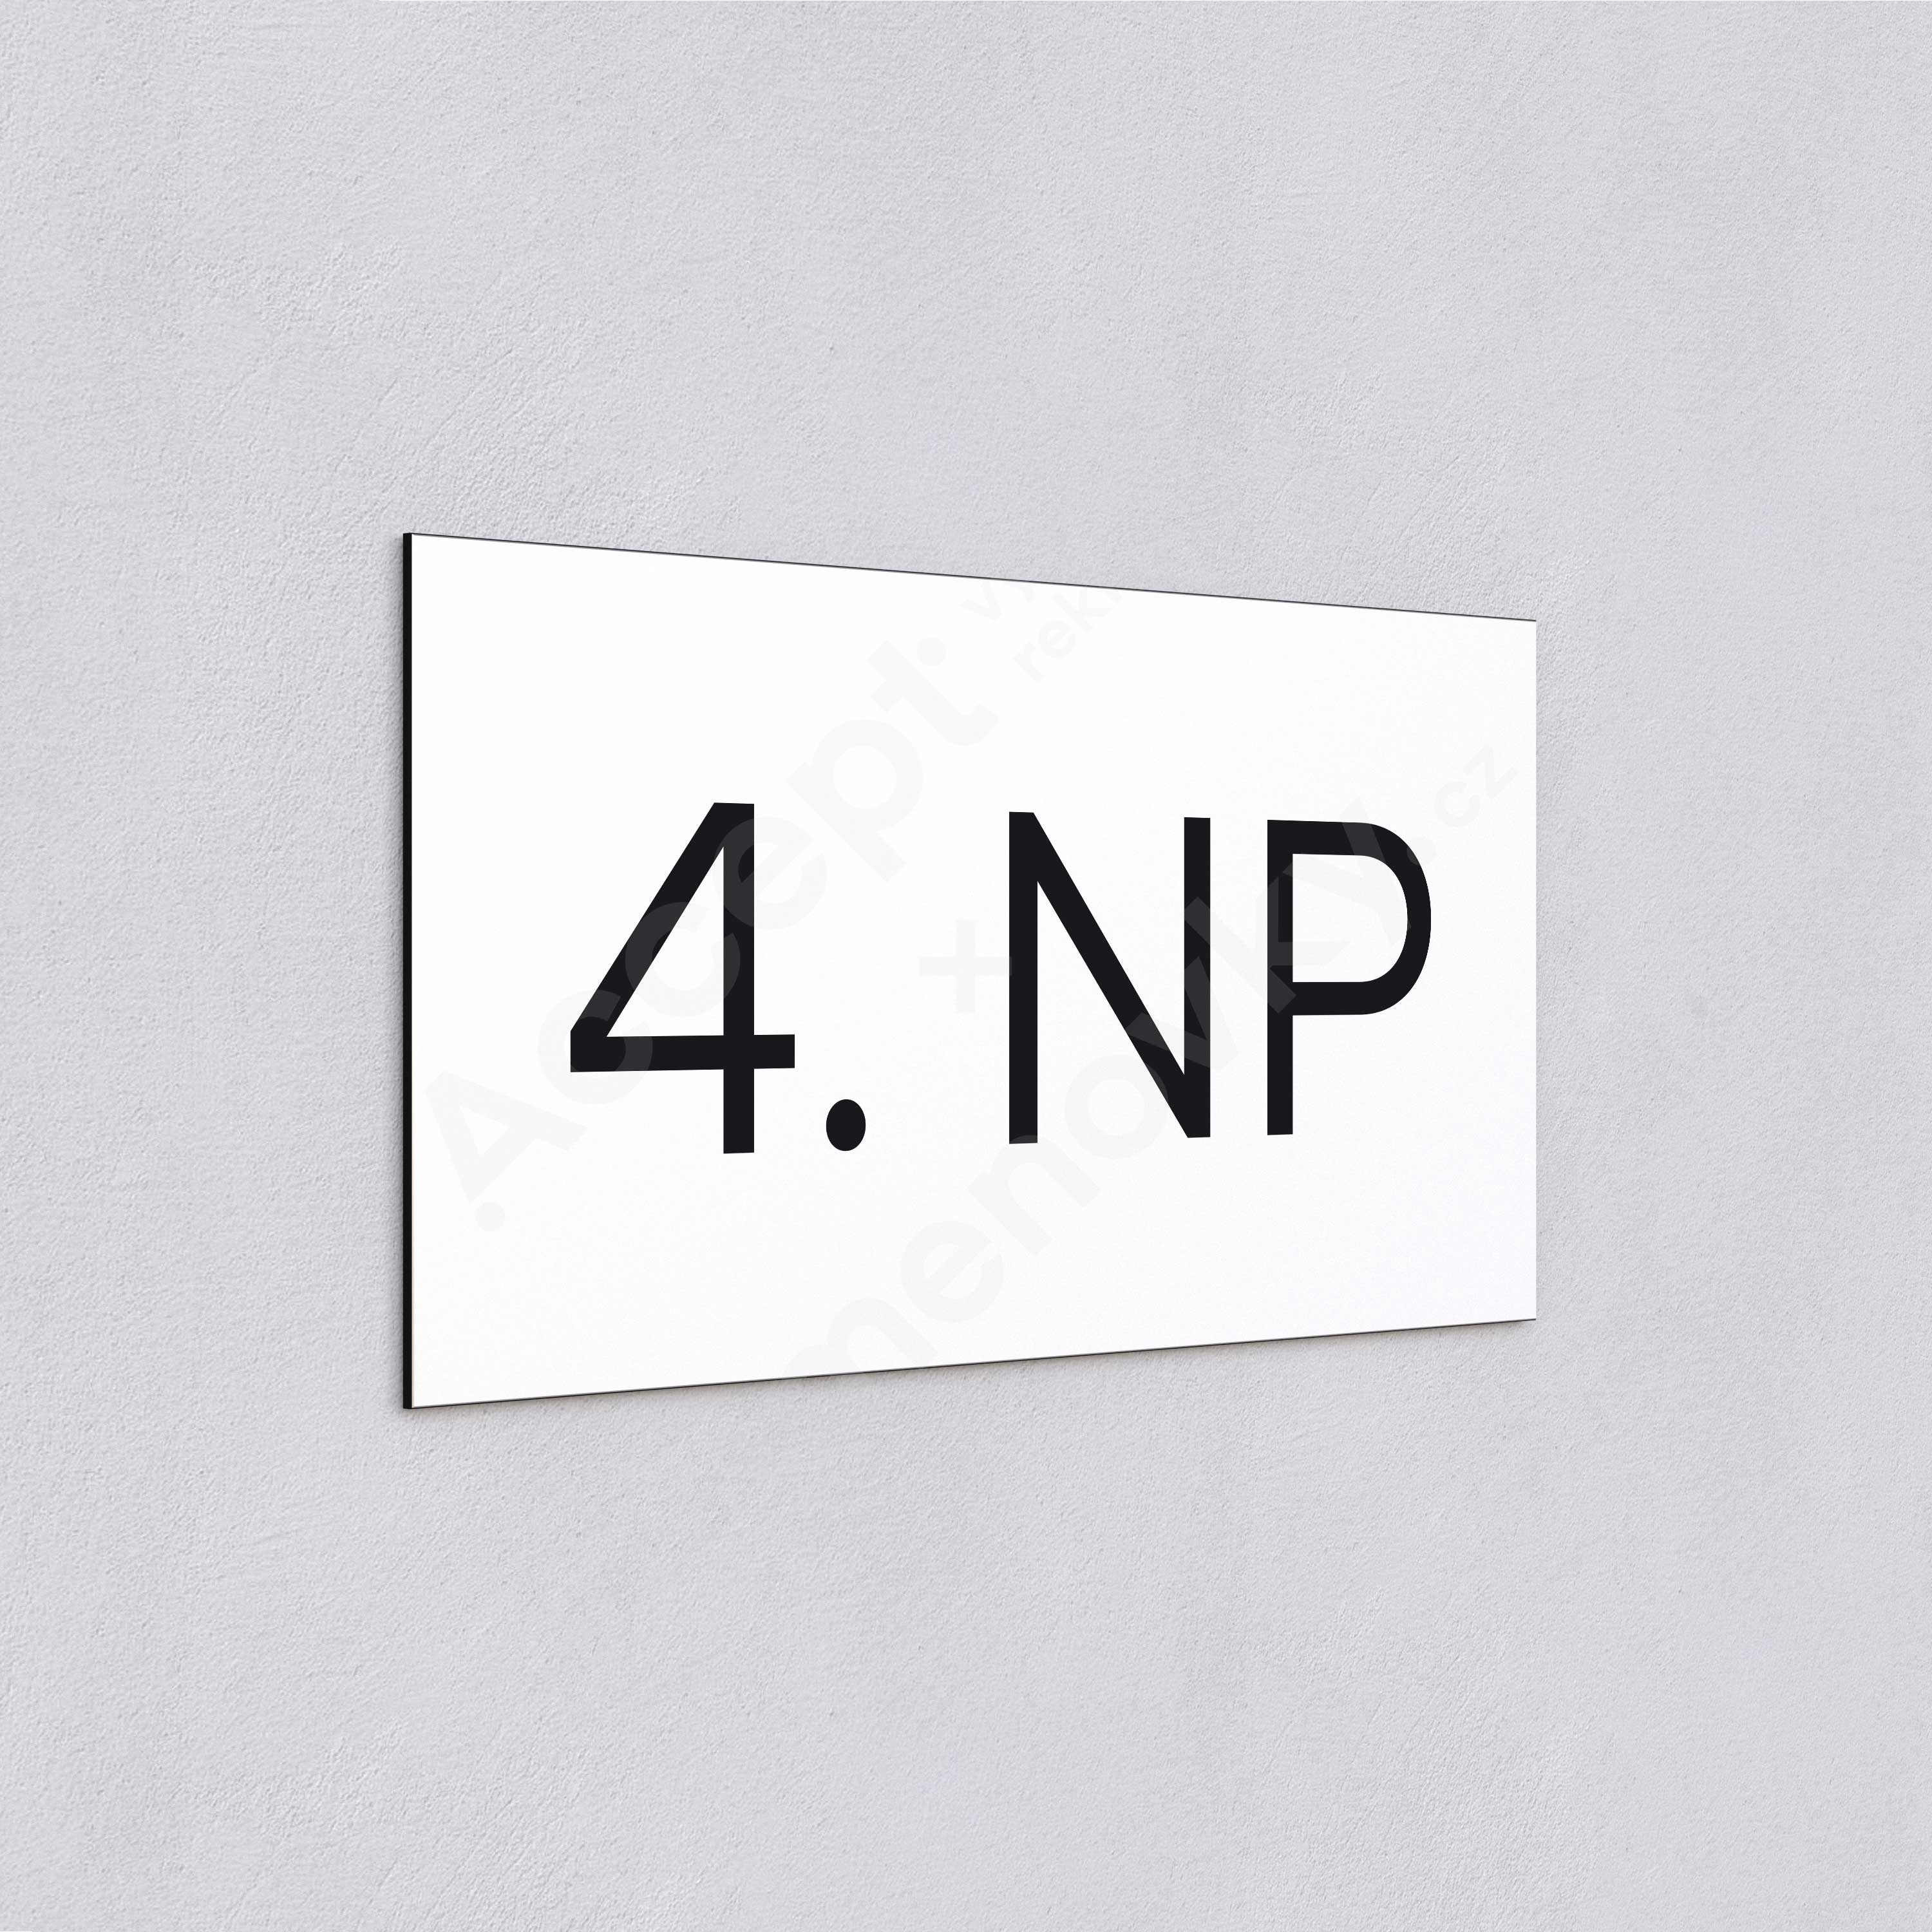 Označení podlaží "4. NP" - bílá tabulka - černý popis